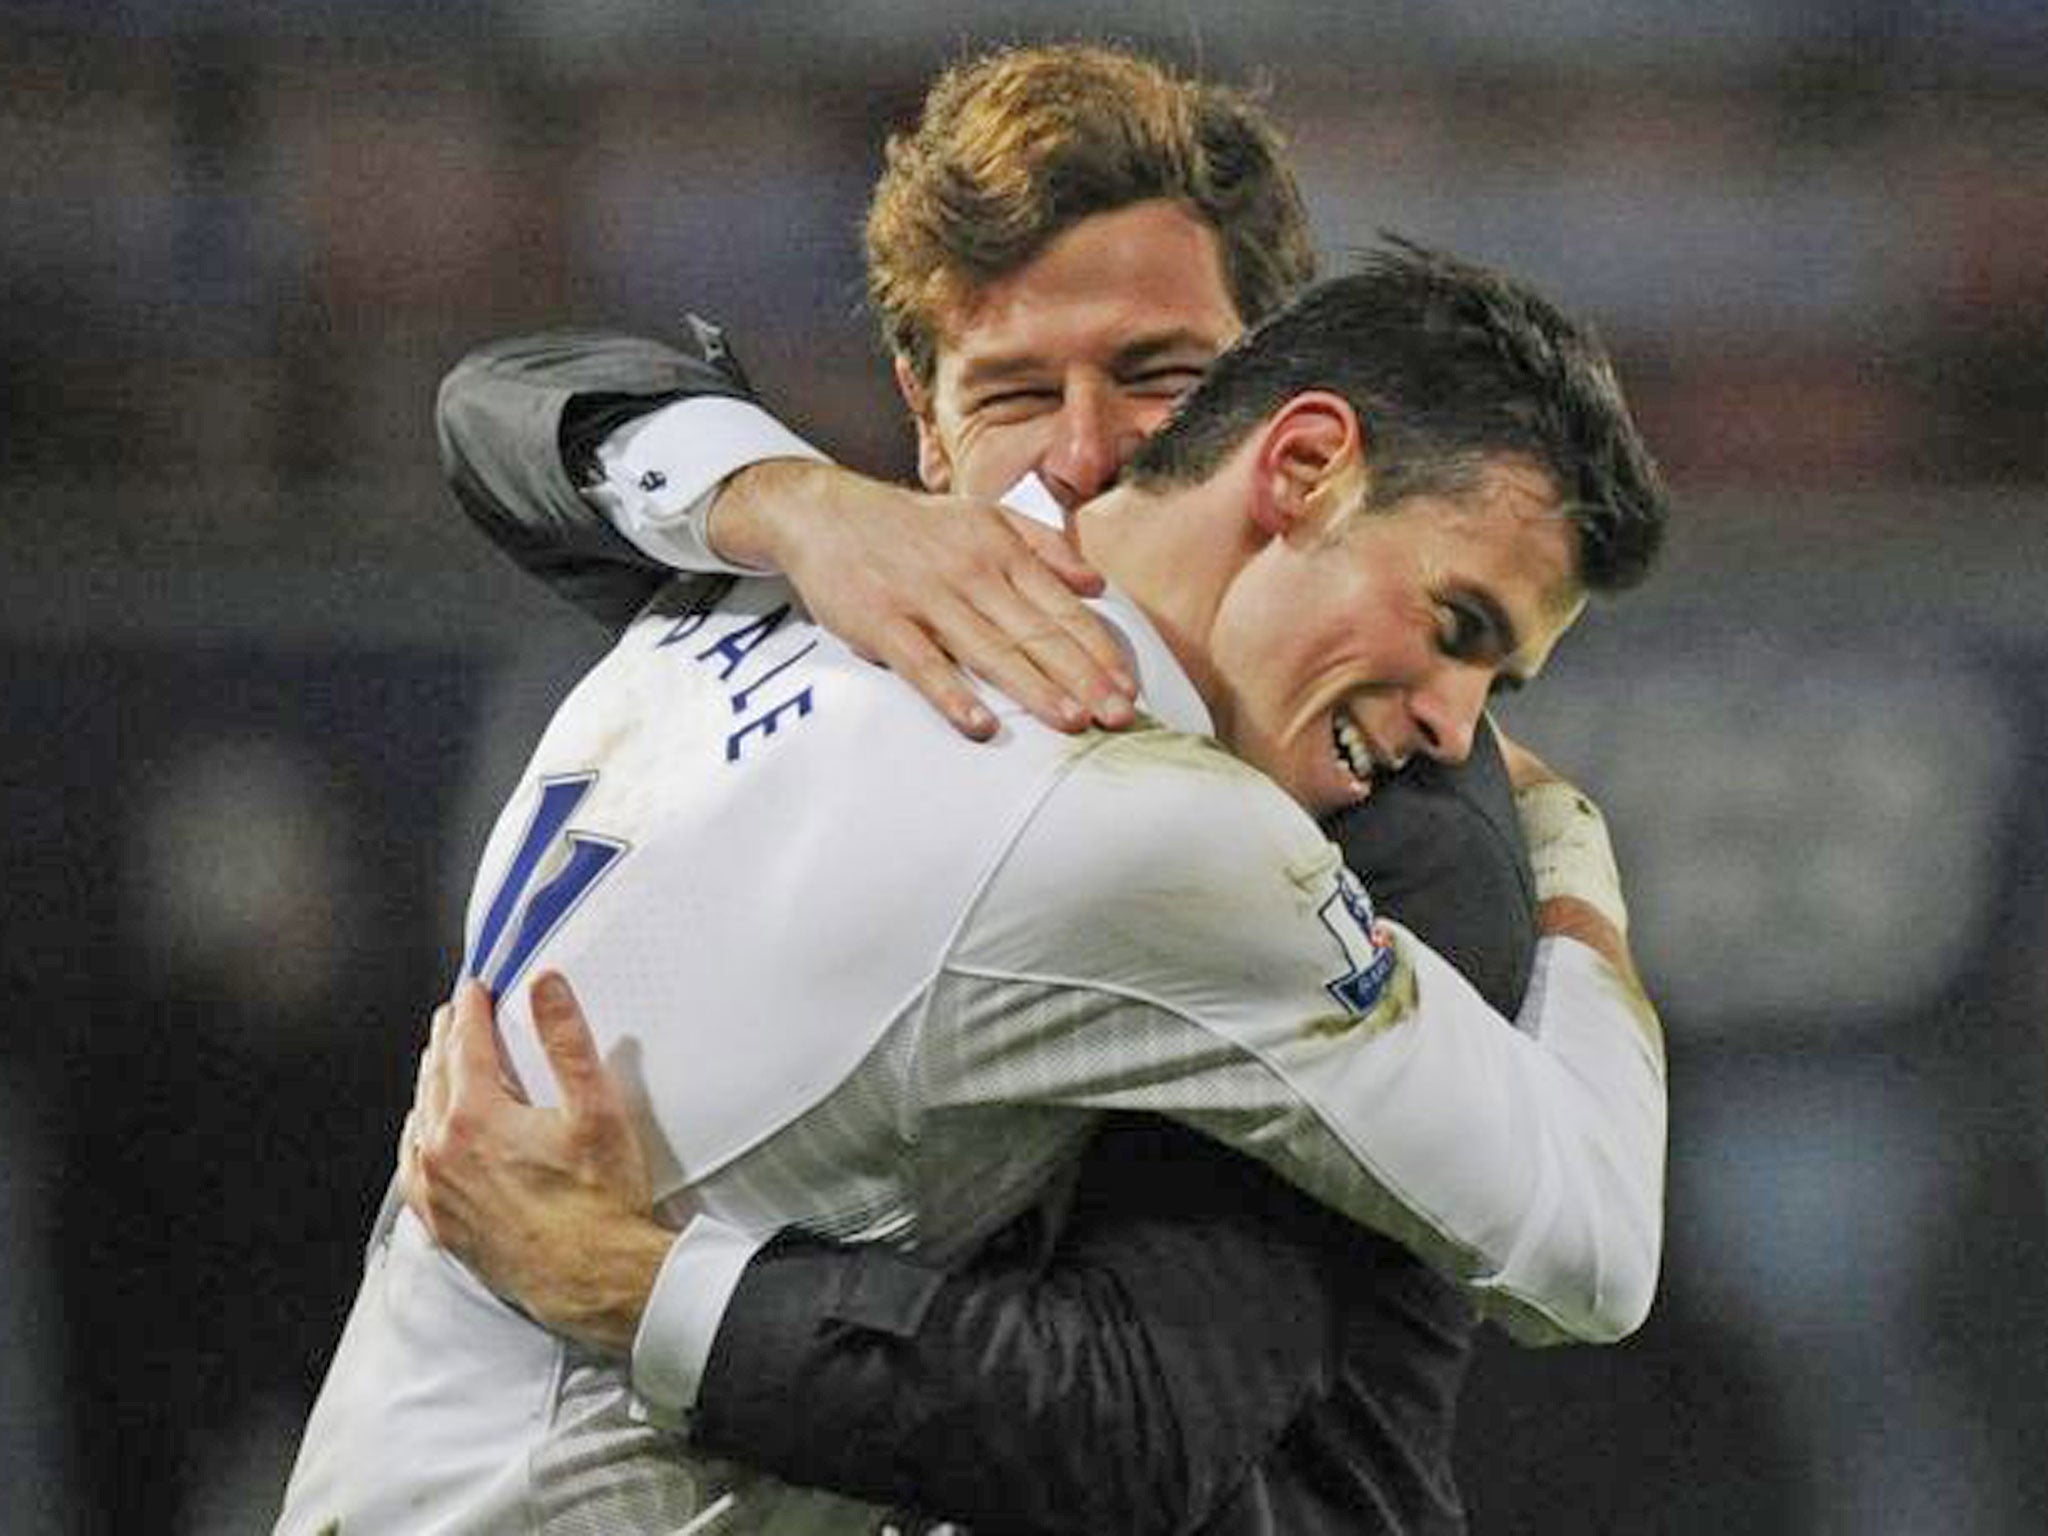 Gareth Bale celebrates with his manager Andre Villas Boas